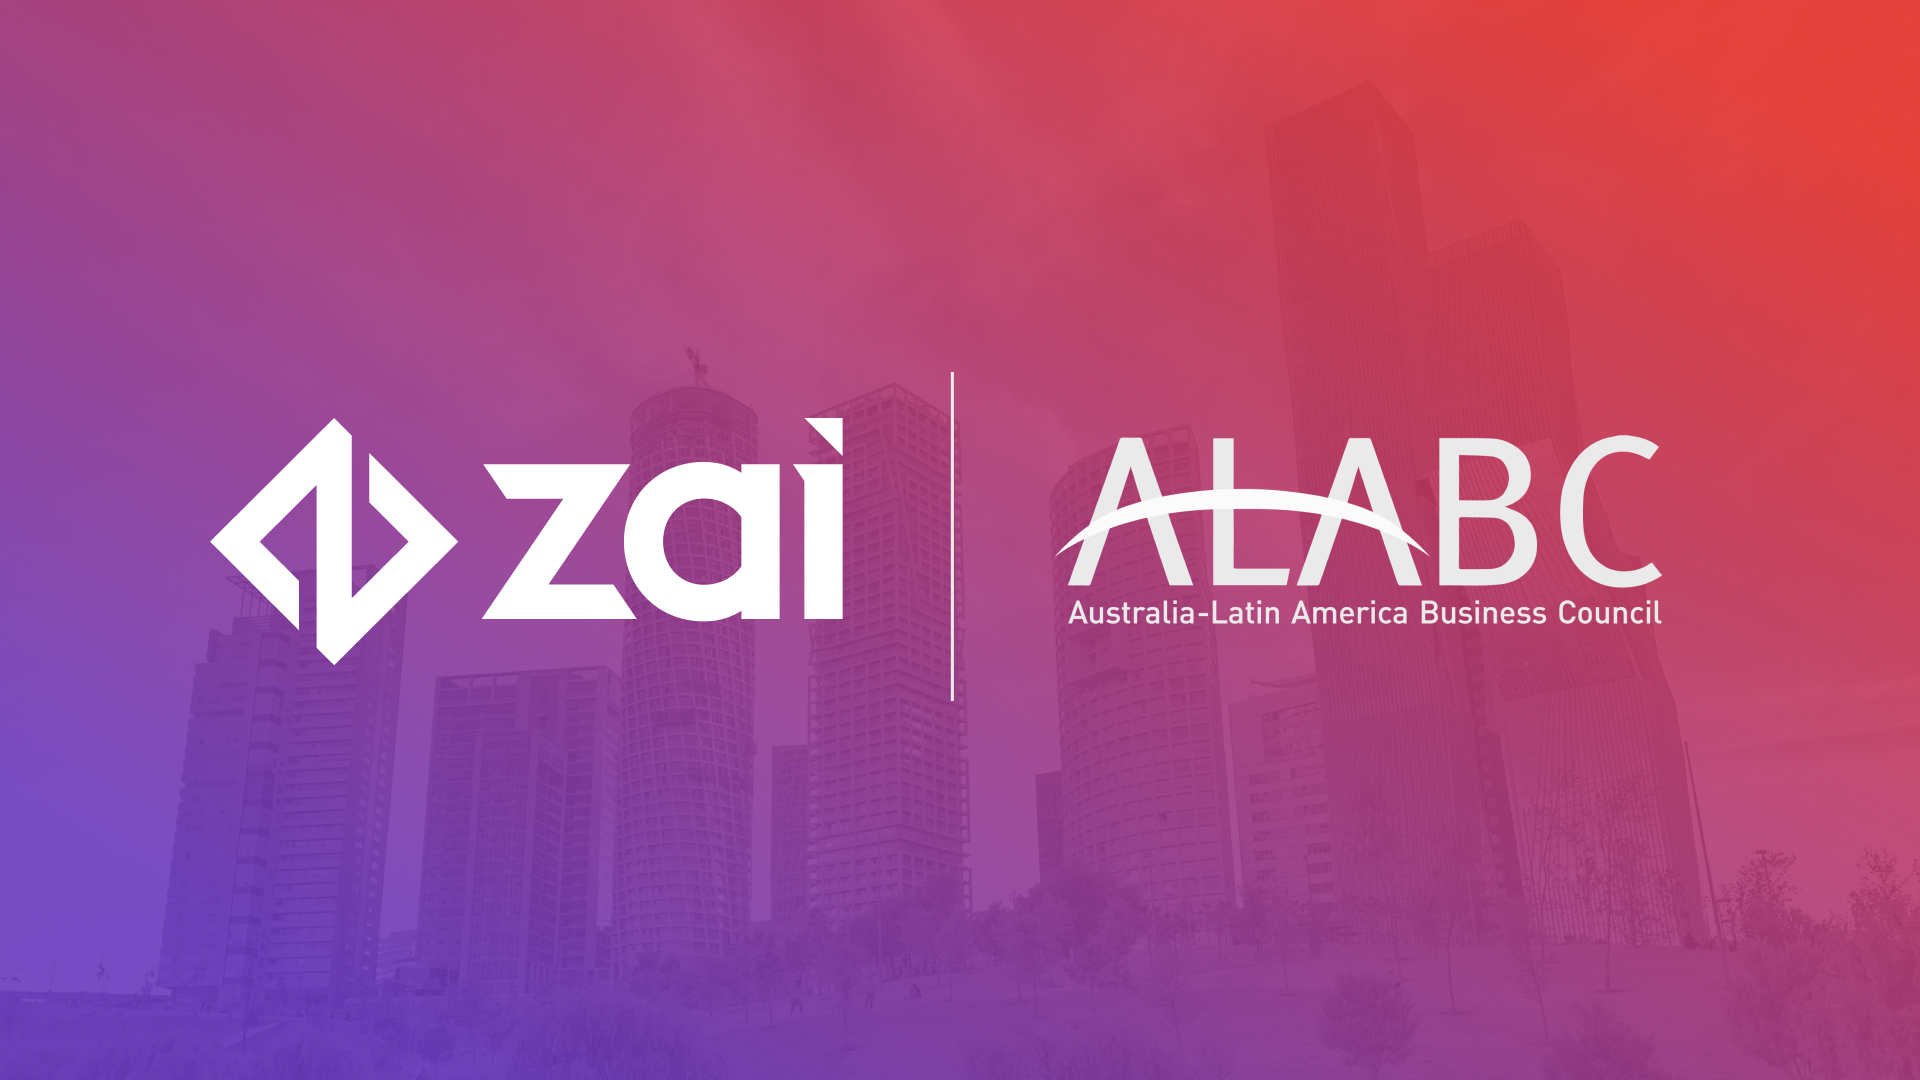 Zai partners with Australia-Latin America Business Council